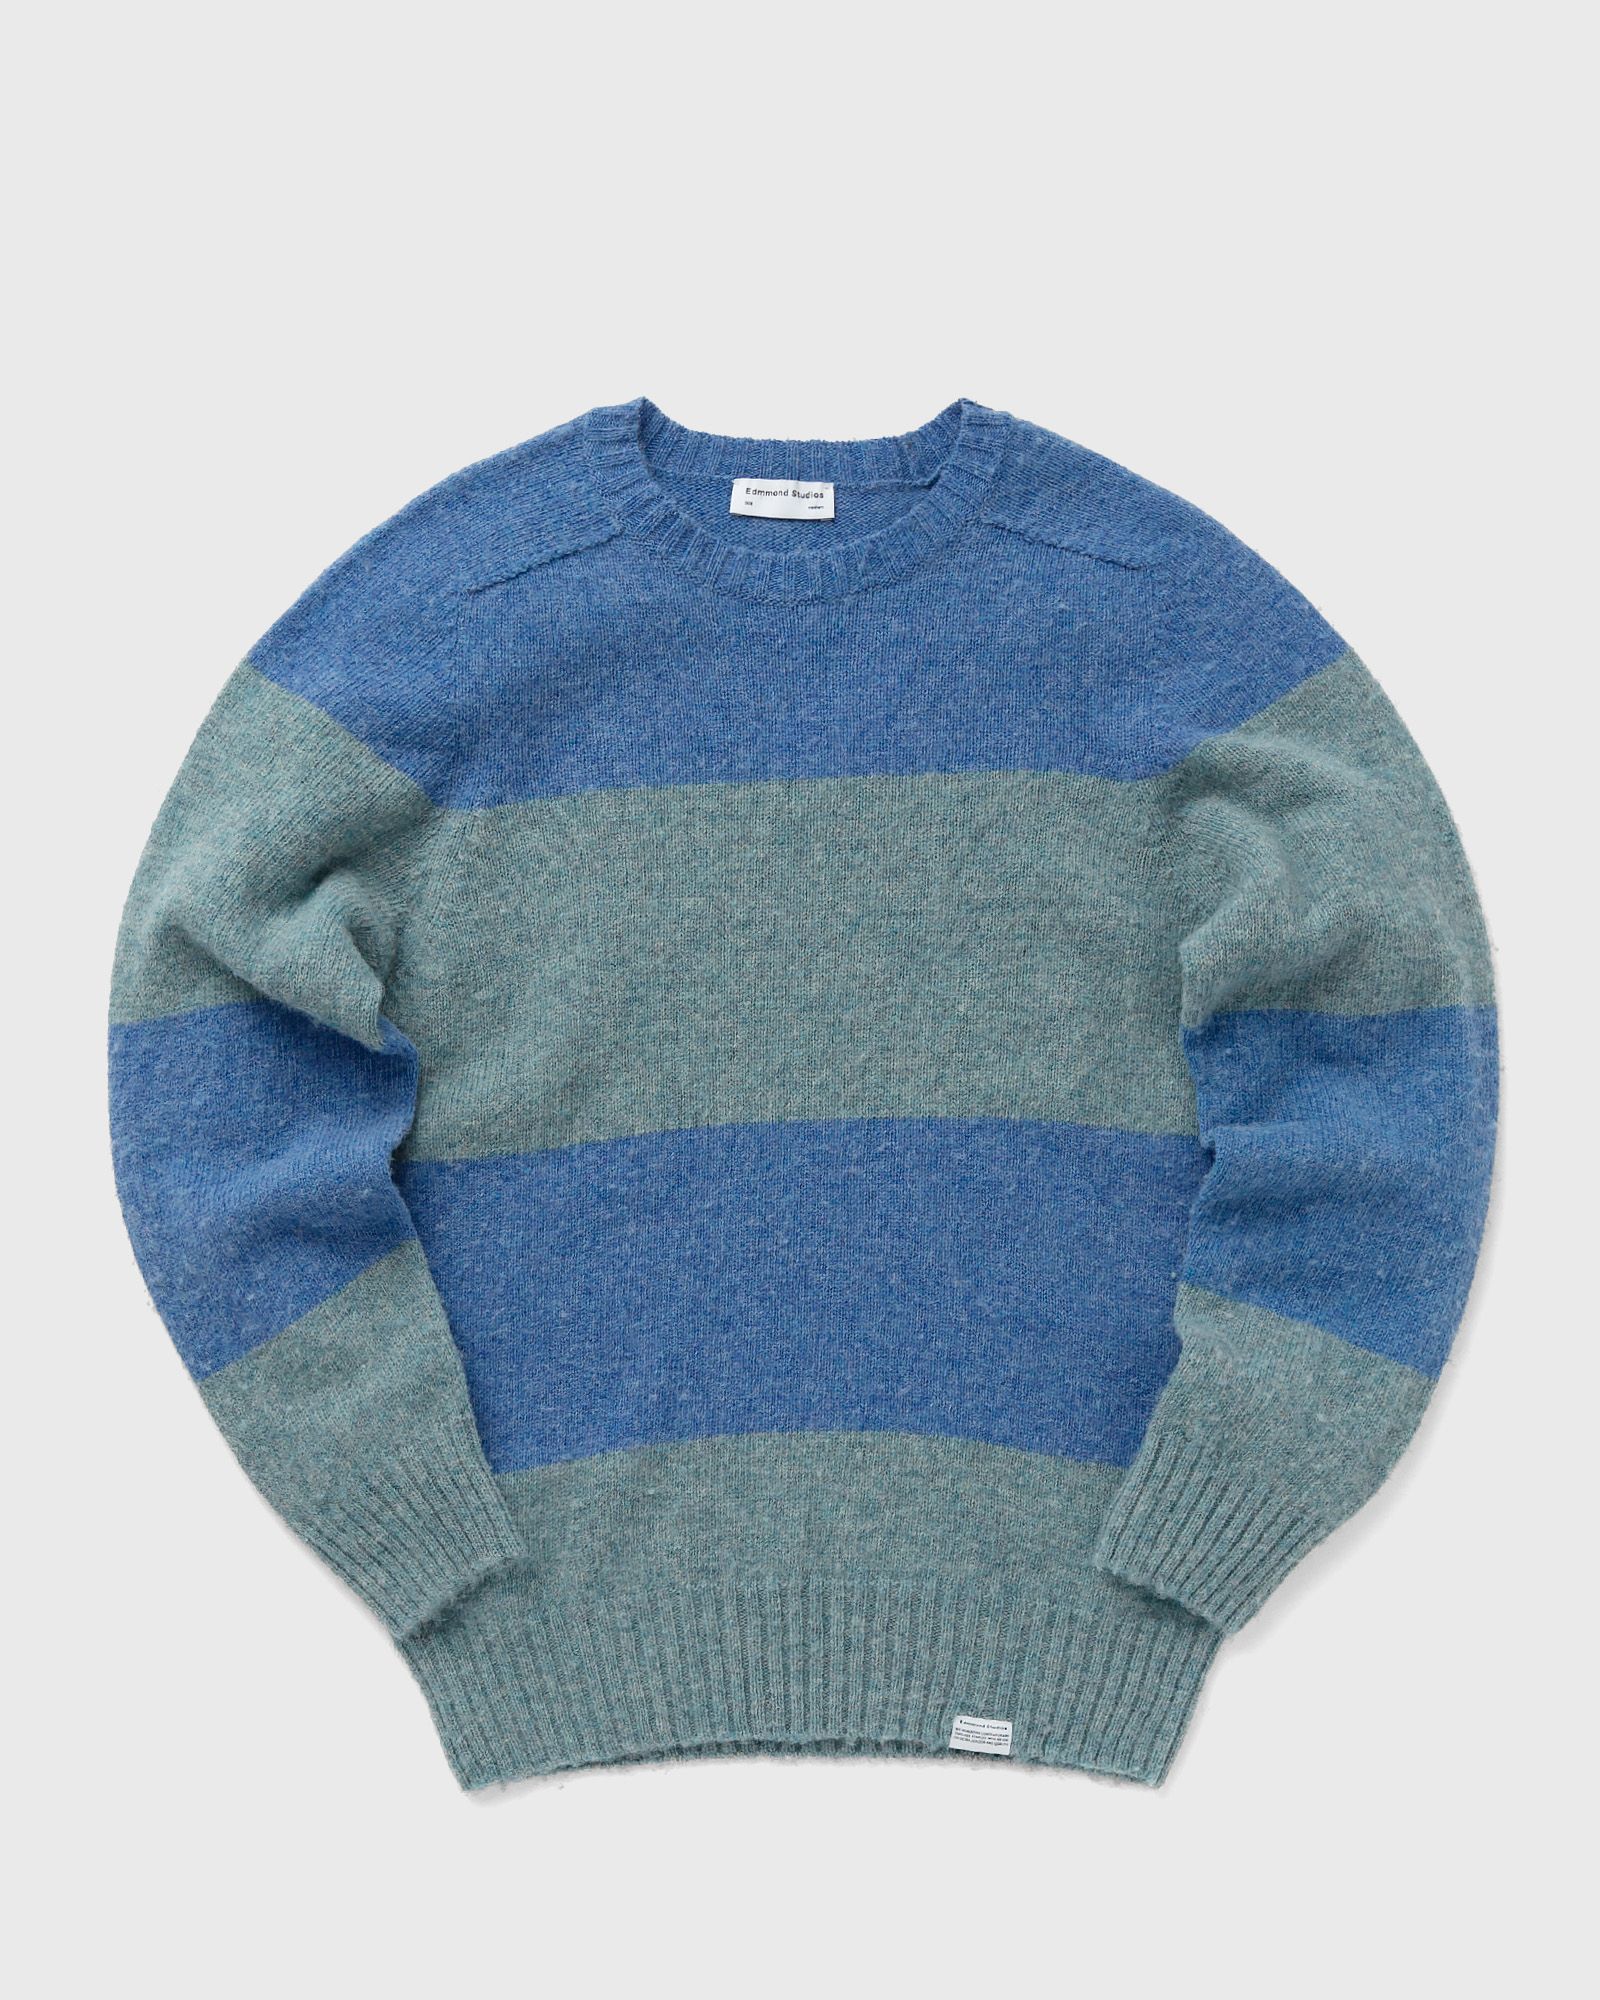 Edmmond Studios - stripes sweater men pullovers blue in größe:xl